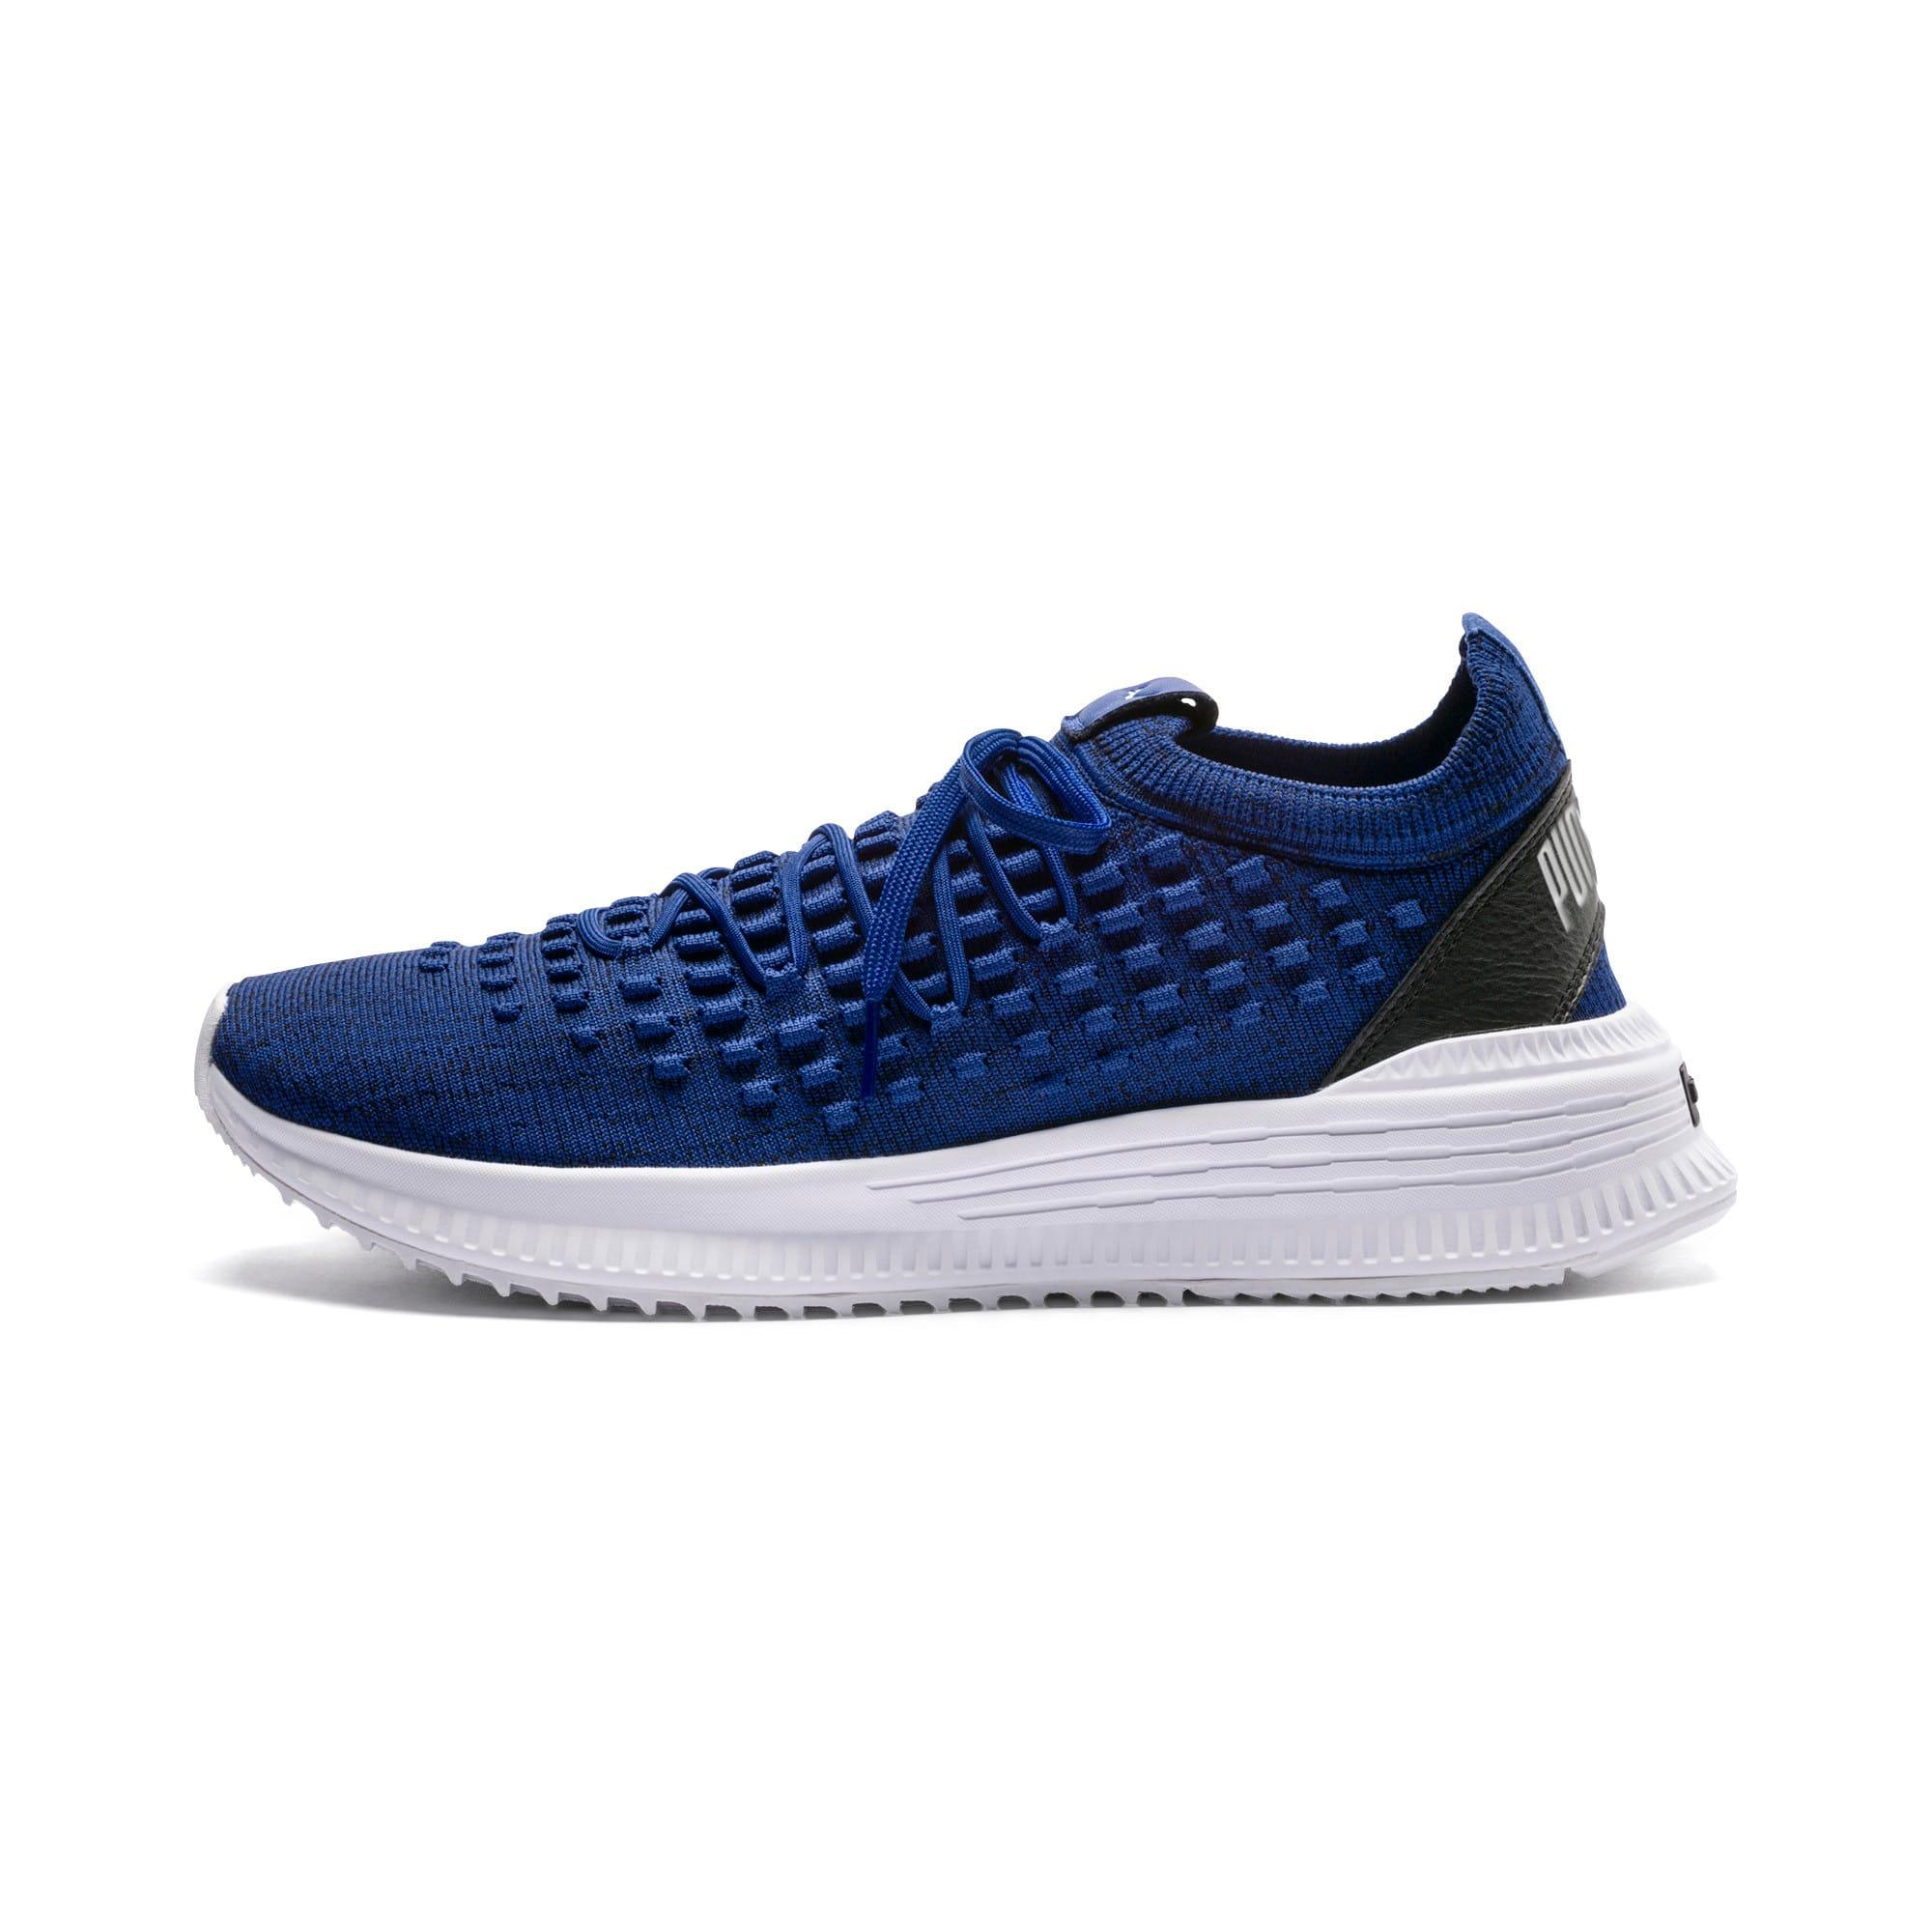 PUMA Rubber Avid Fusefit Sneaker in Blue for Men - Save 54% - Lyst